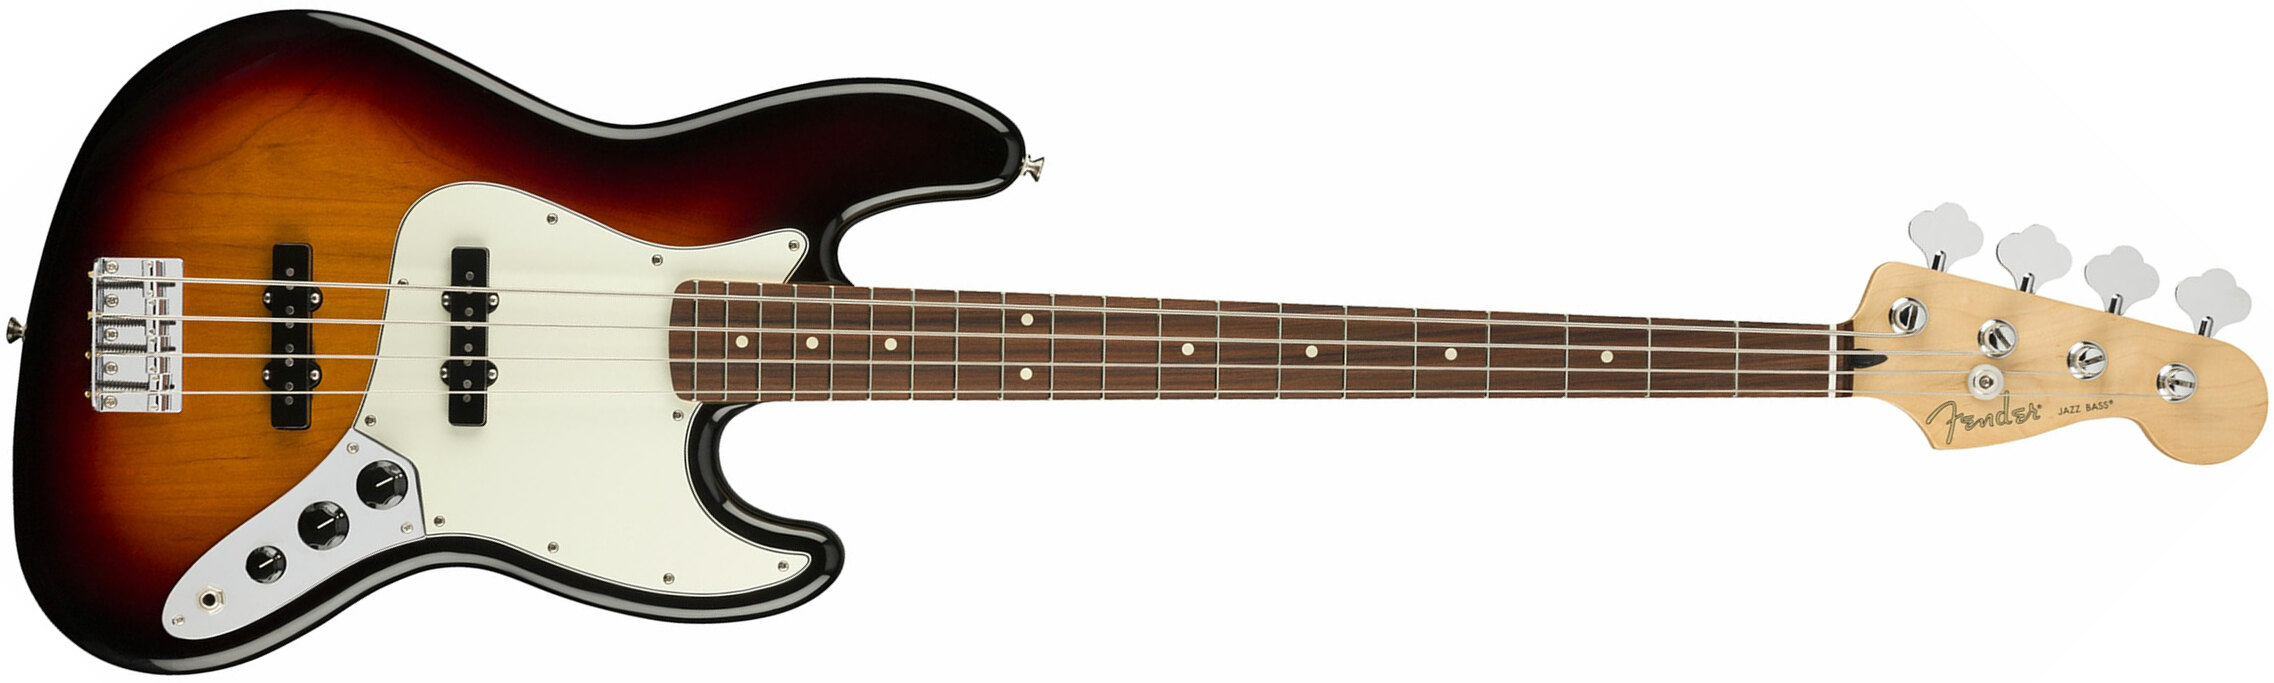 Fender Jazz Bass Player Mex Pf - 3-color Sunburst - Solid body elektrische bas - Main picture